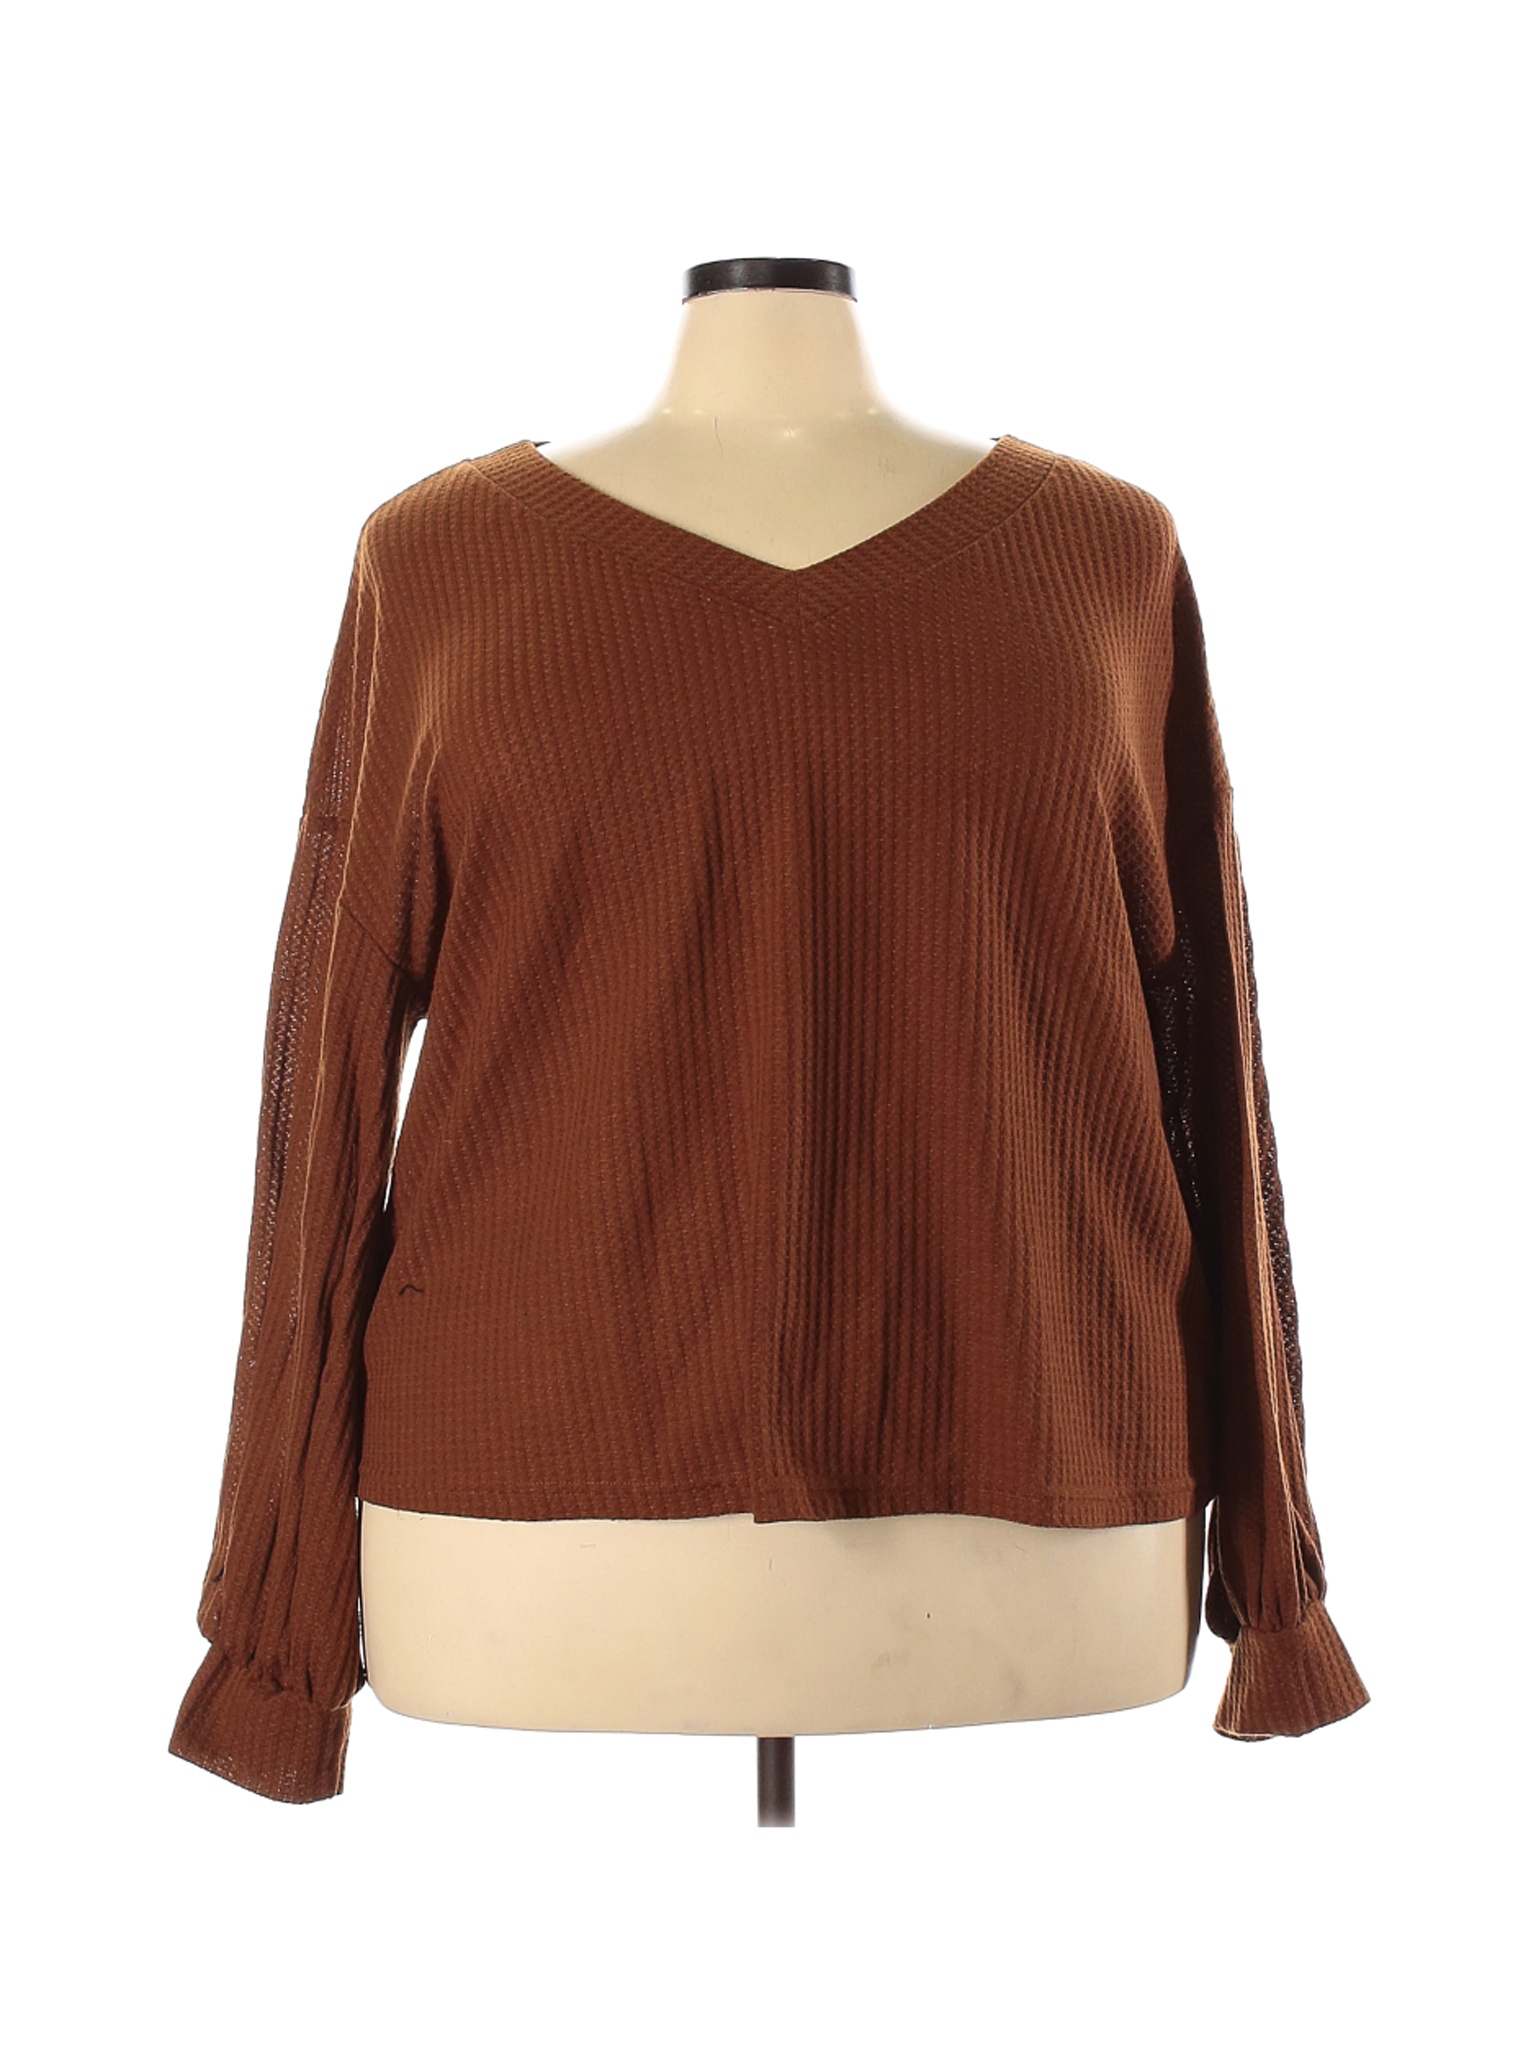 Shein Women Brown Long Sleeve Top 4X Plus | eBay